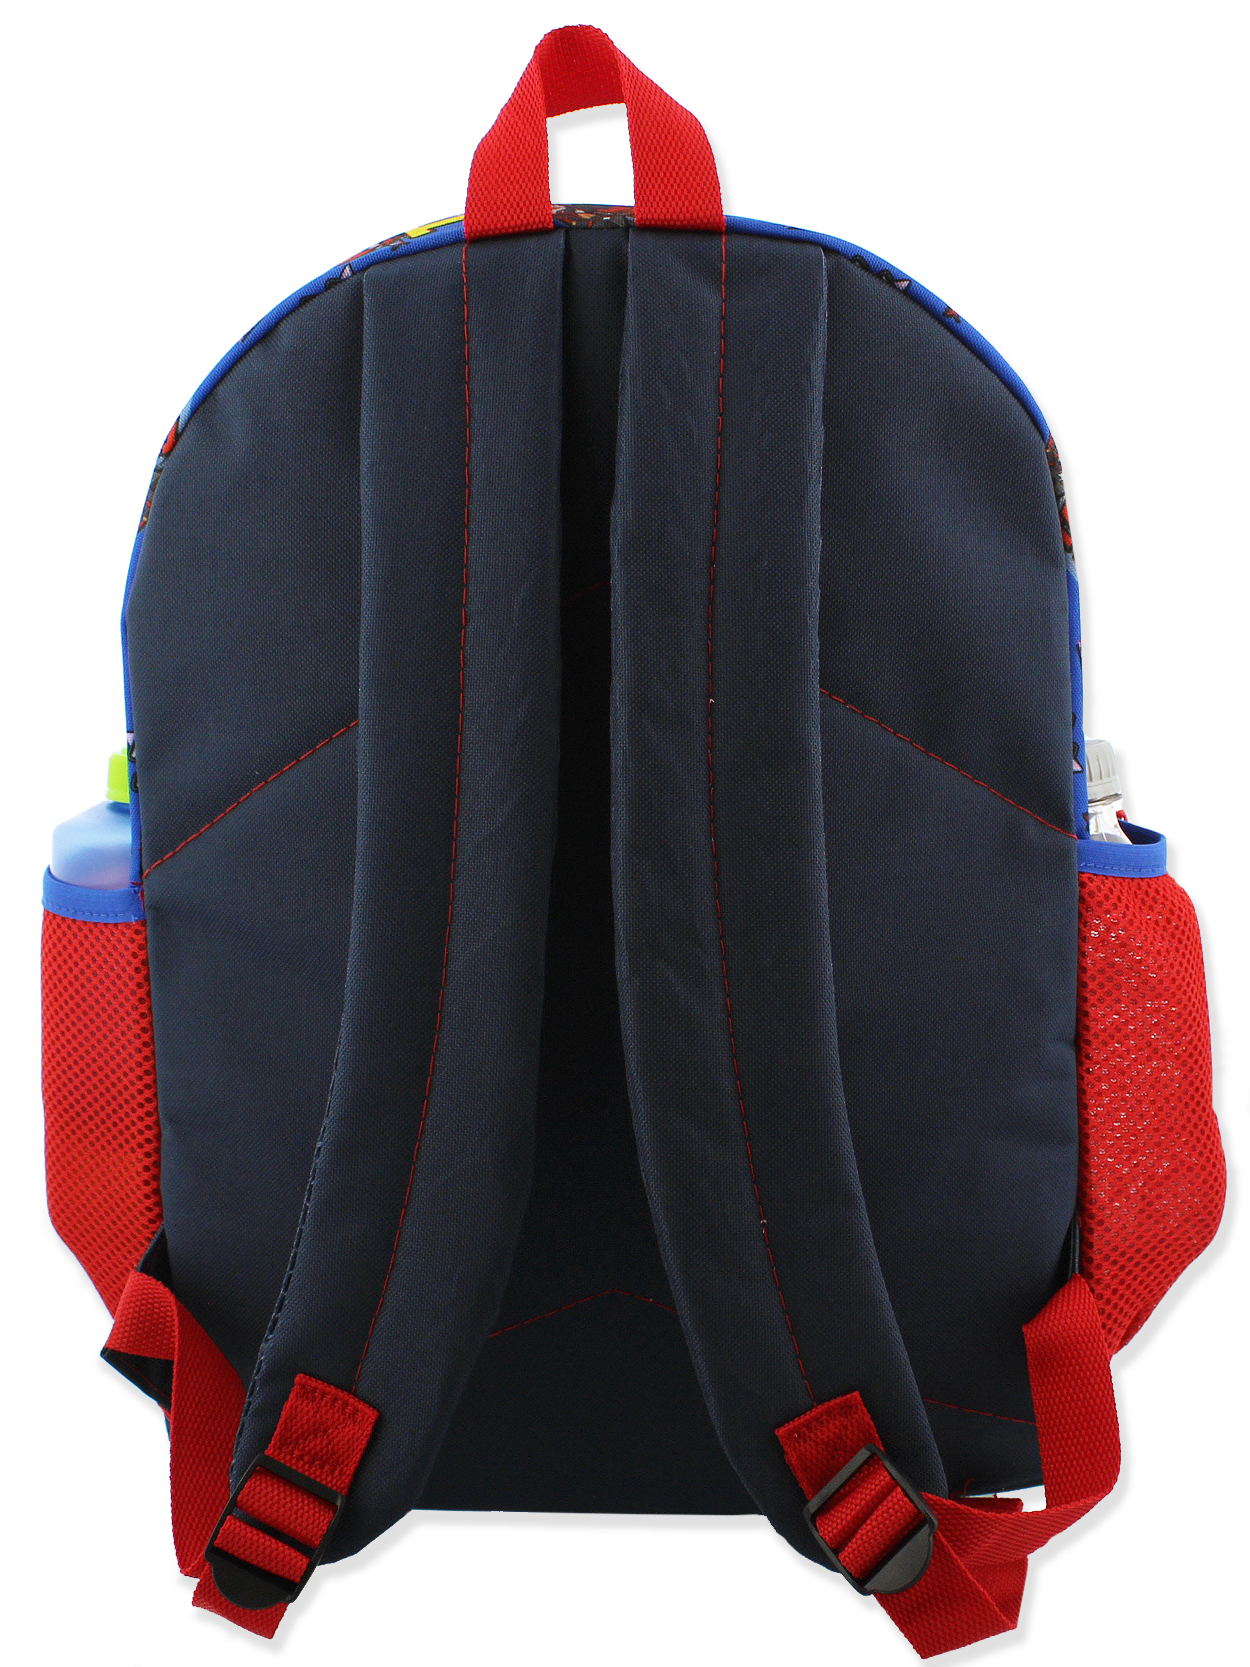 Super Hero Adventures Boys 5 piece Backpack and Snack Bag School Set MUCF5K3YT - image 5 of 7